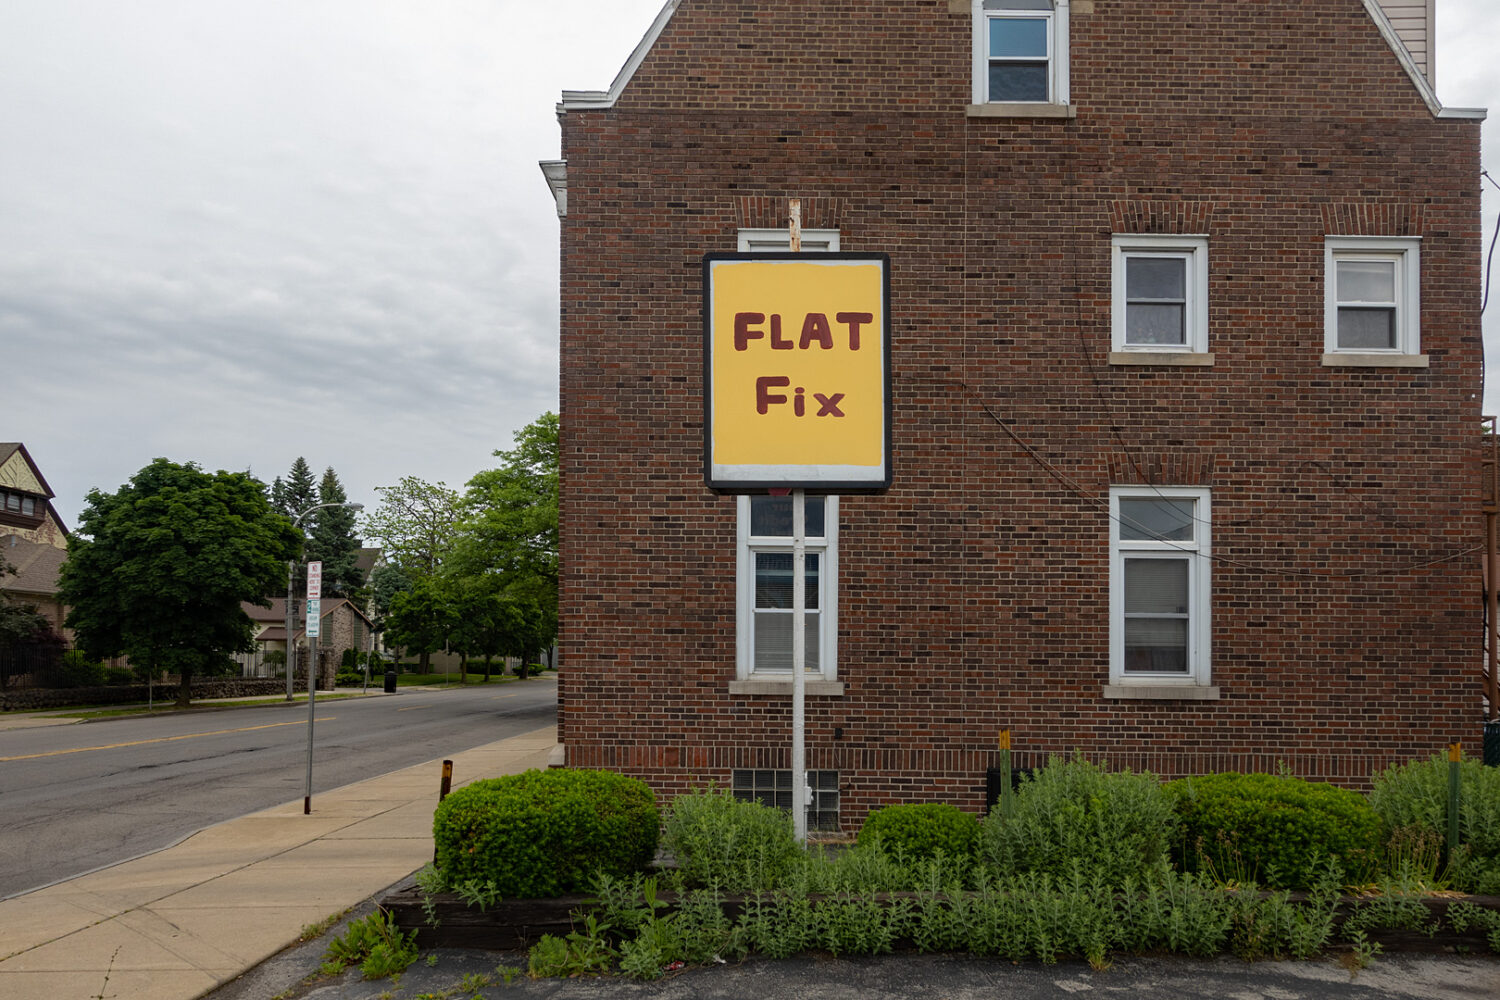 "Flat Fix" sign along Main Street in Niagara Falls